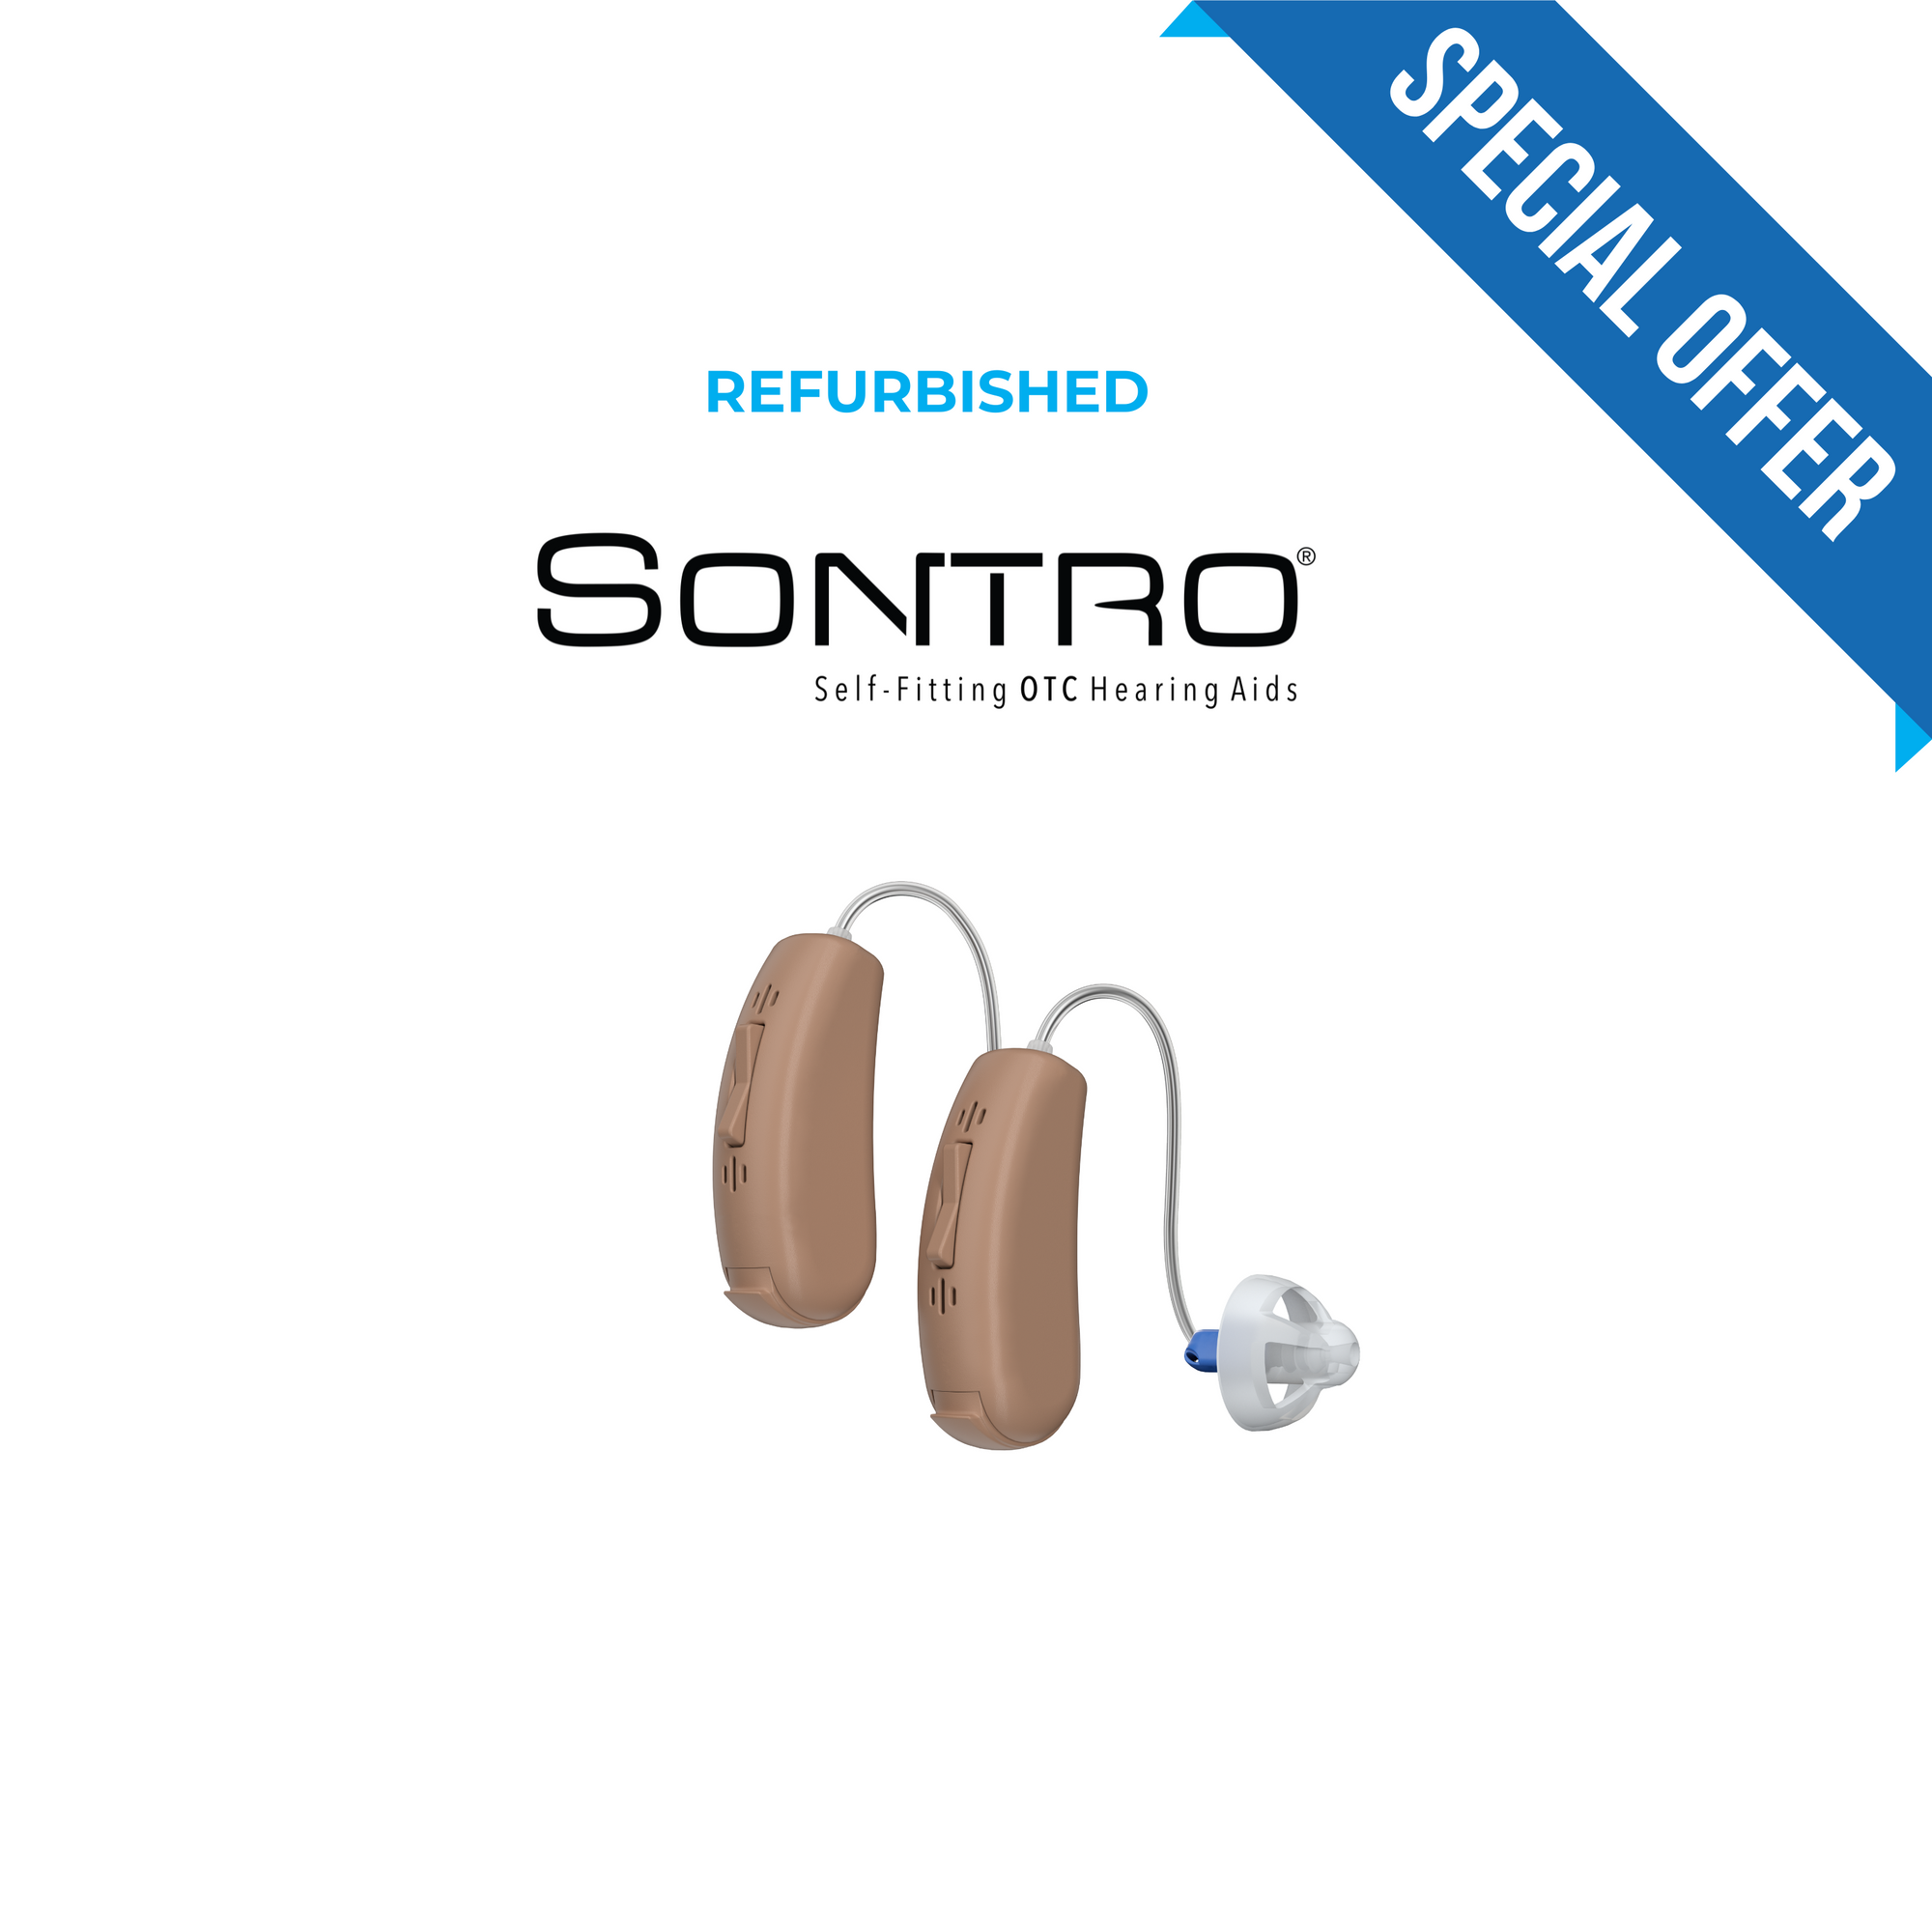 Refurbished Sontro® Self-Fitting OTC Hearing Aids, Beige Set